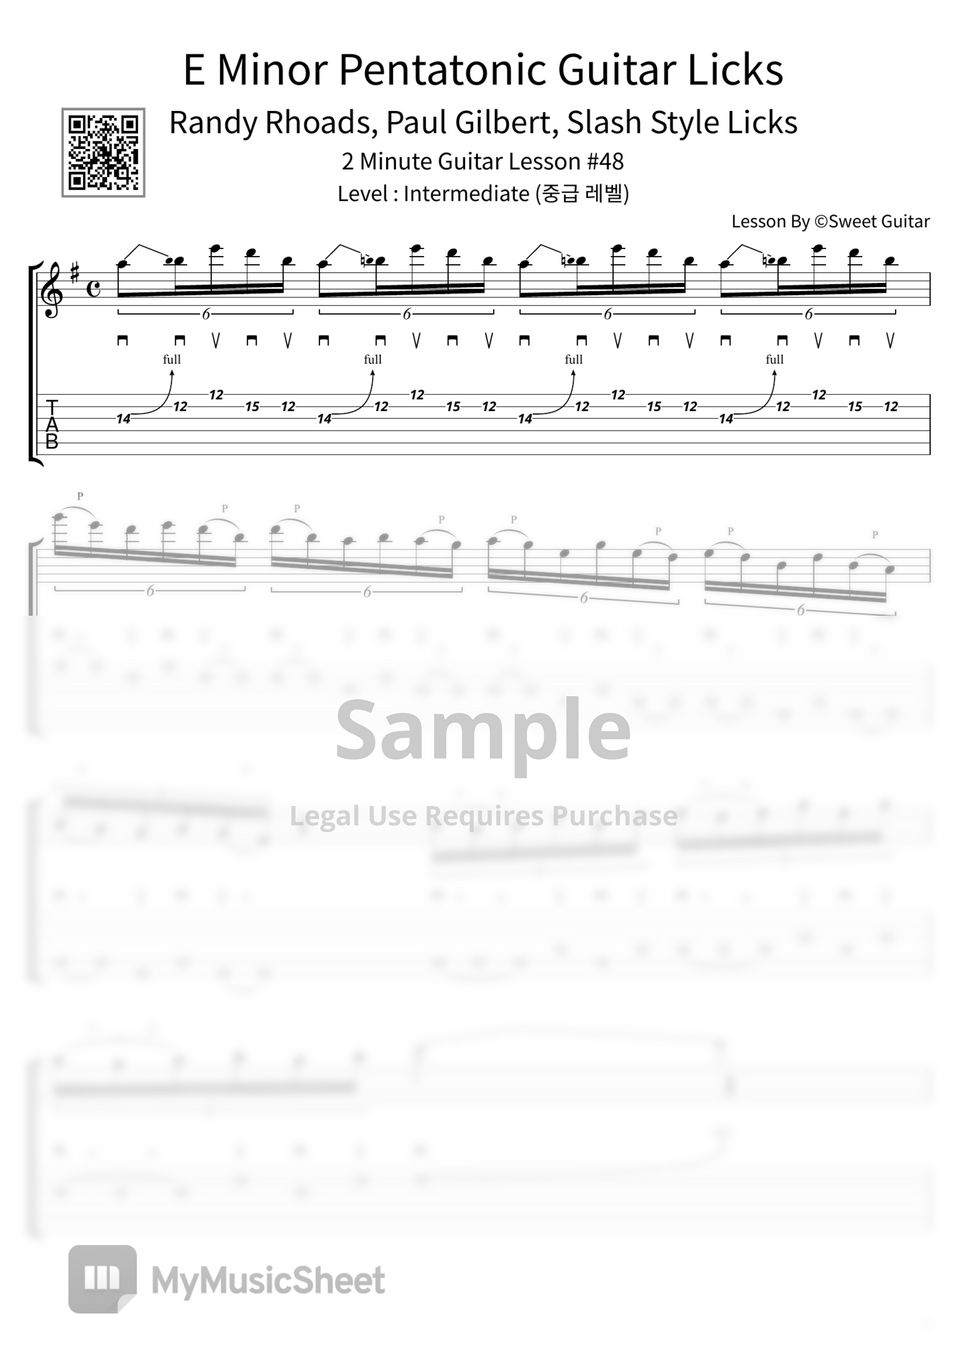 LESSON BY Sweet Guitar - E minor Pentatonic Licks (2m 48) (레슨 컨텐츠) by Sweet Guitar